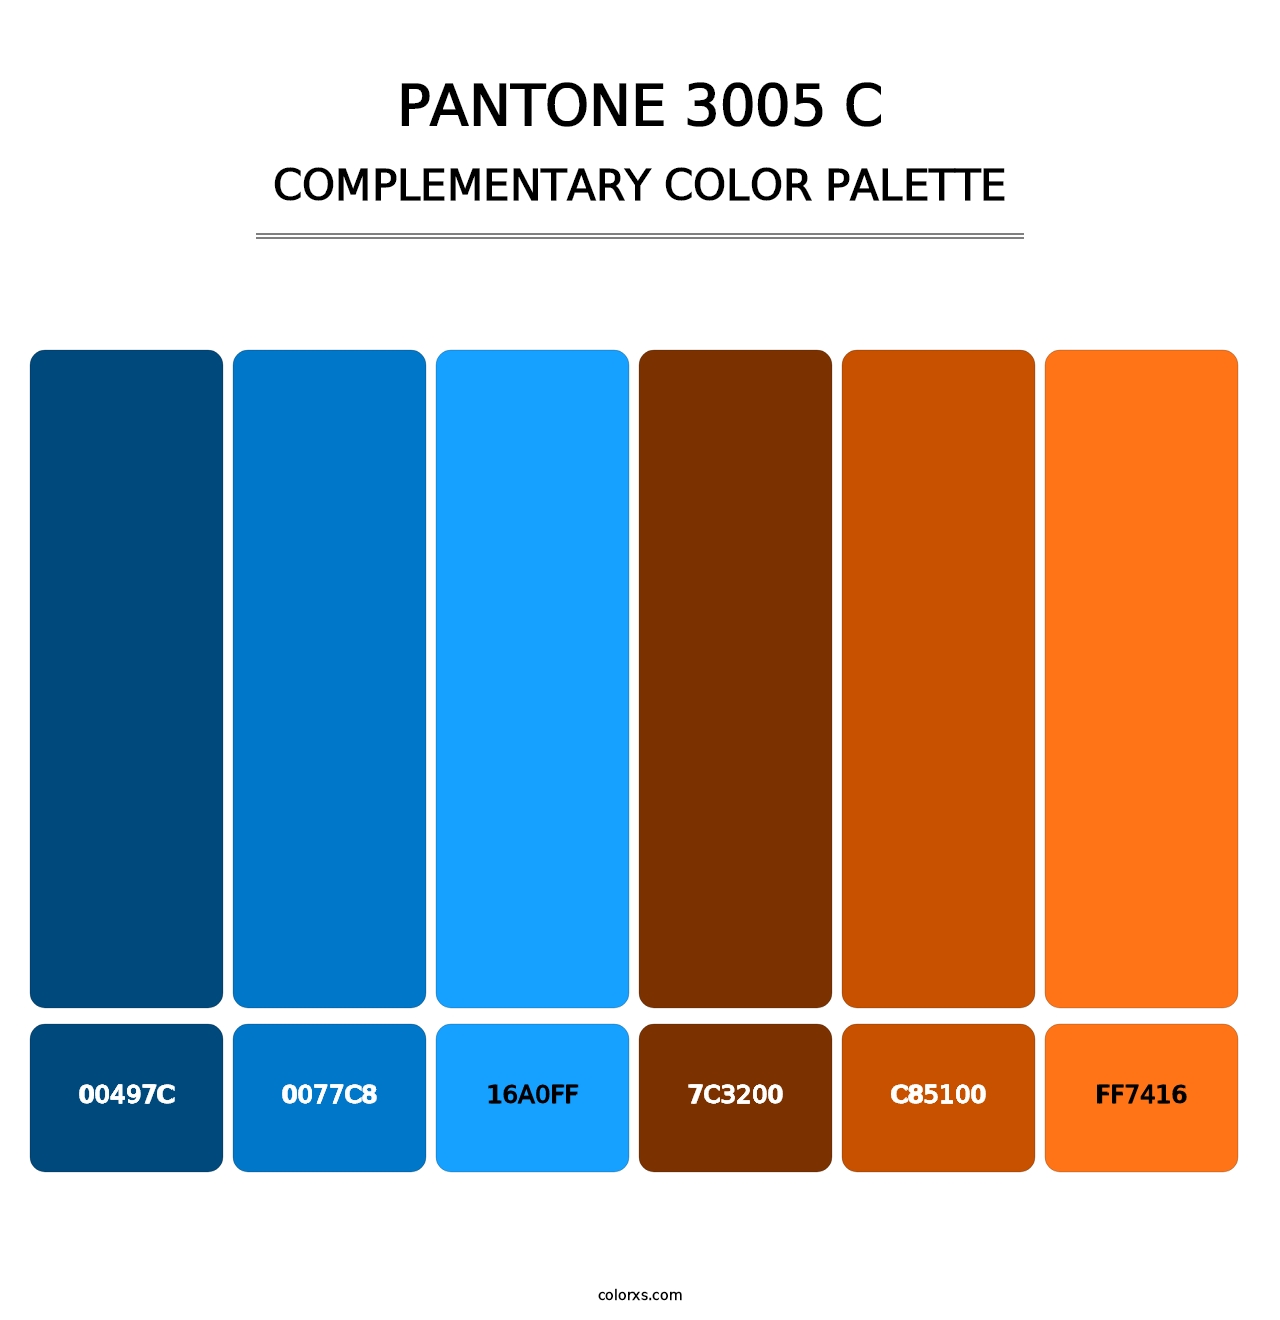 PANTONE 3005 C - Complementary Color Palette